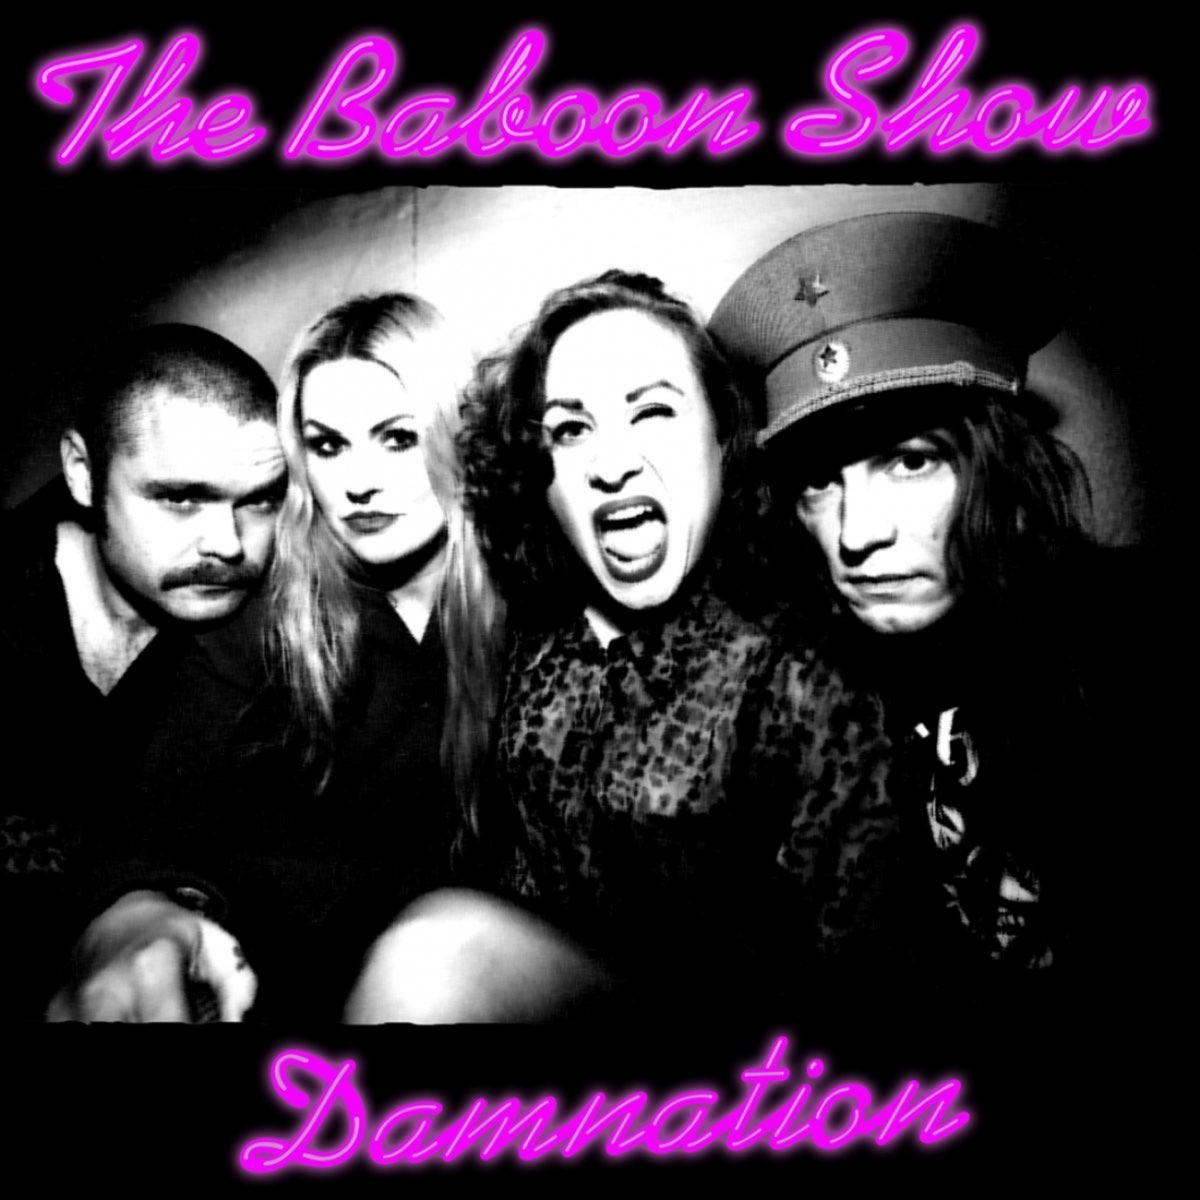 Я бабуин песня. The Baboons группа. Baboon show группа. Baboons show dawnnation. The Baboon show группа мерч.